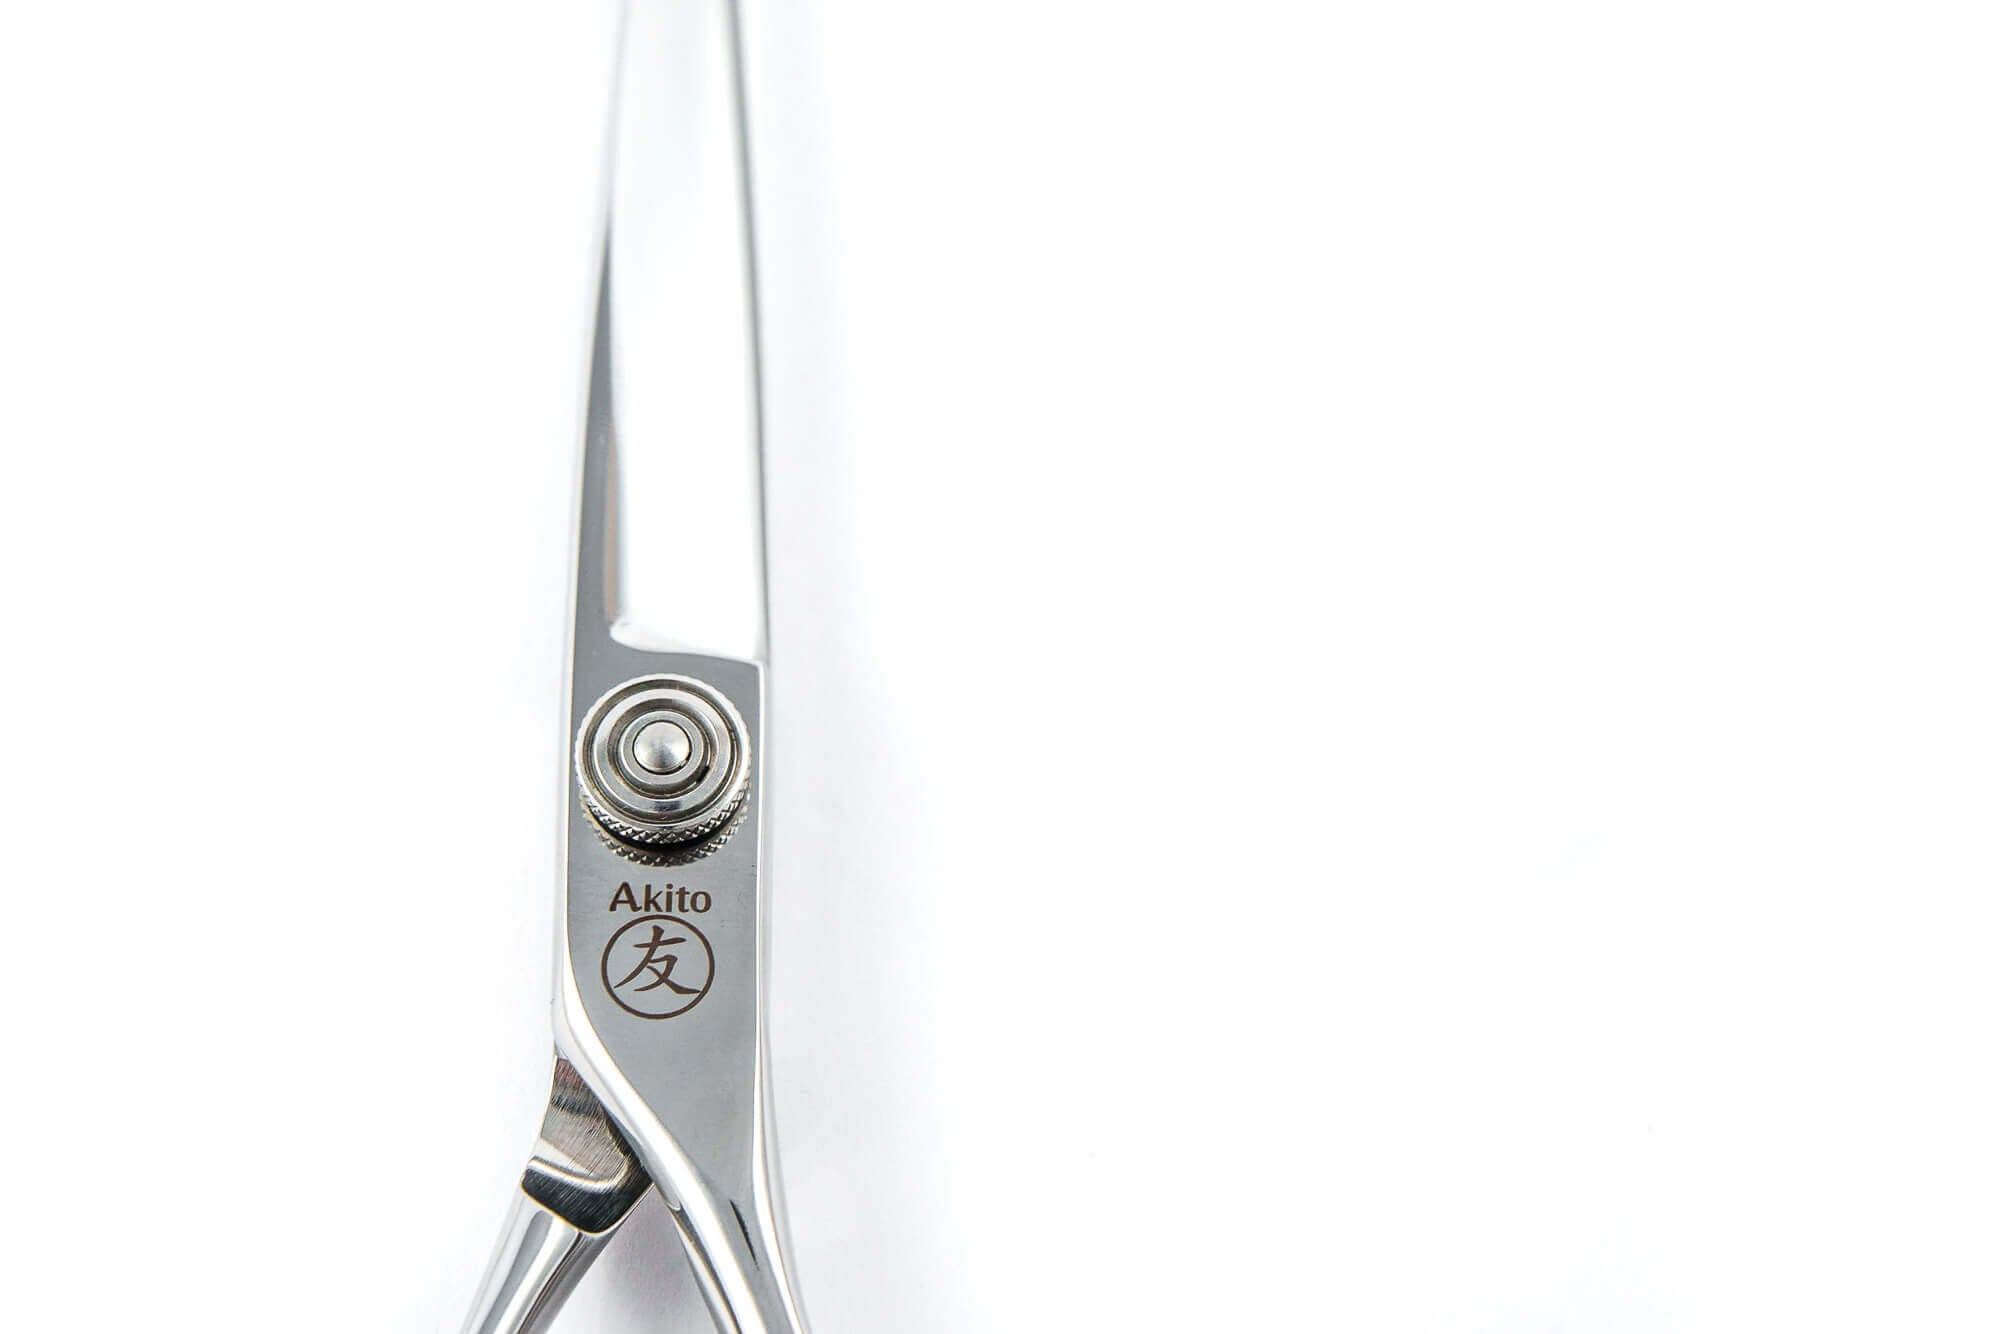 Professional Japanese steel hair cutting scissors